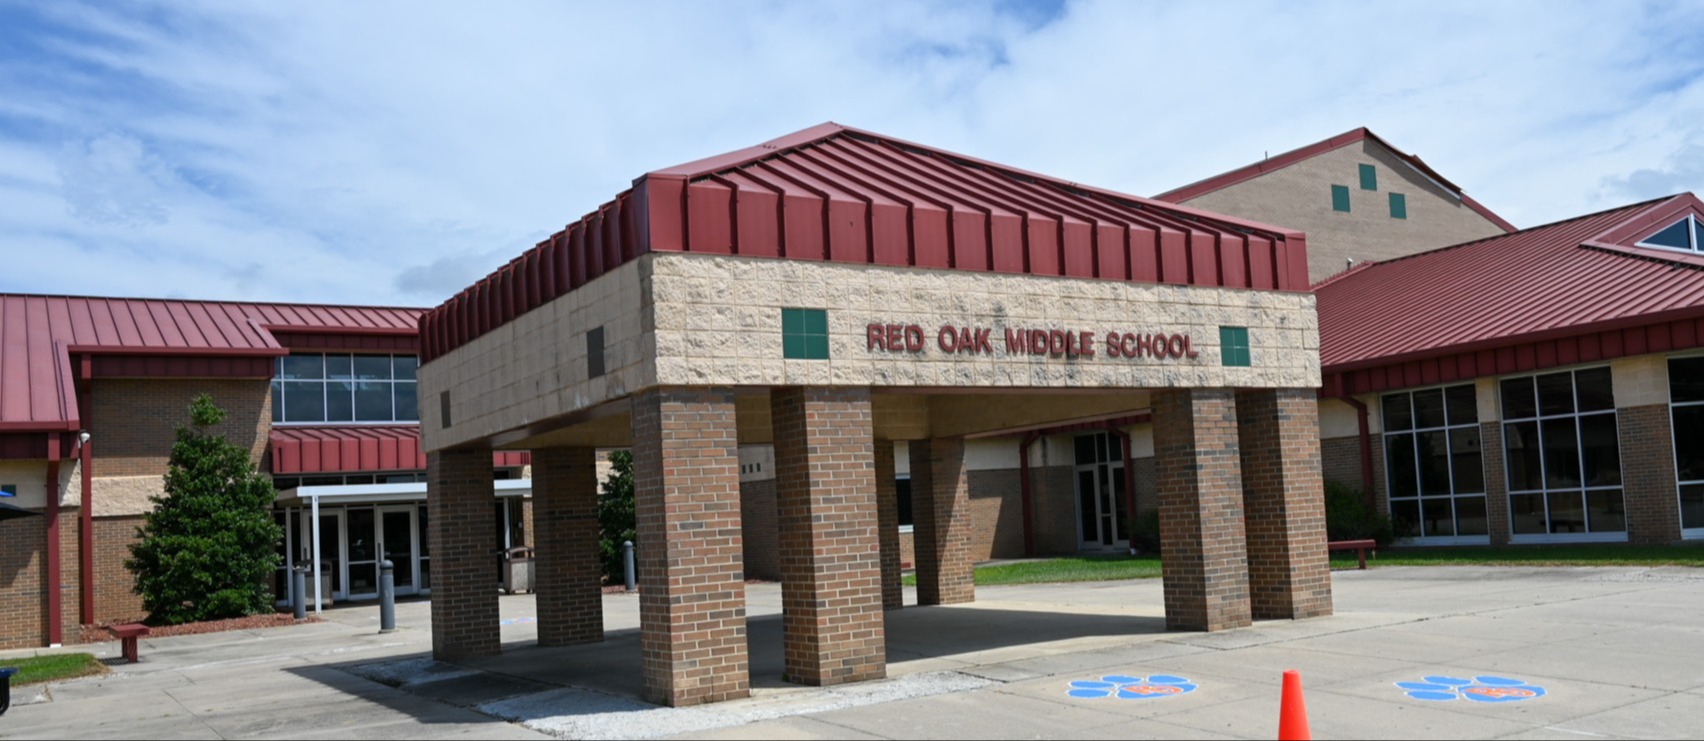 Red Oak Middle school outside of building